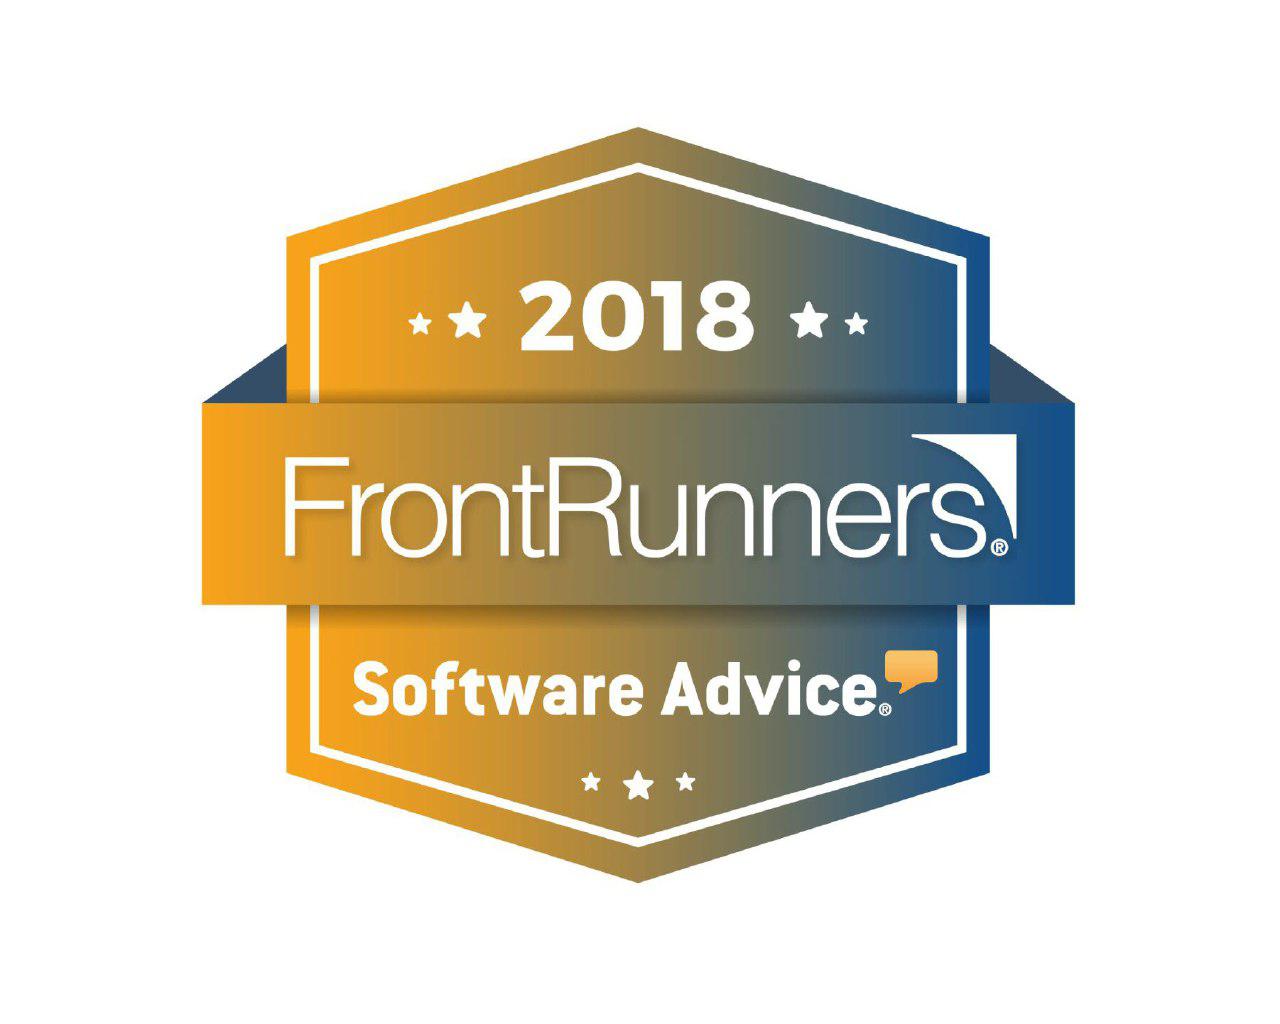 GanttPRO Frontrunners by Software Advice